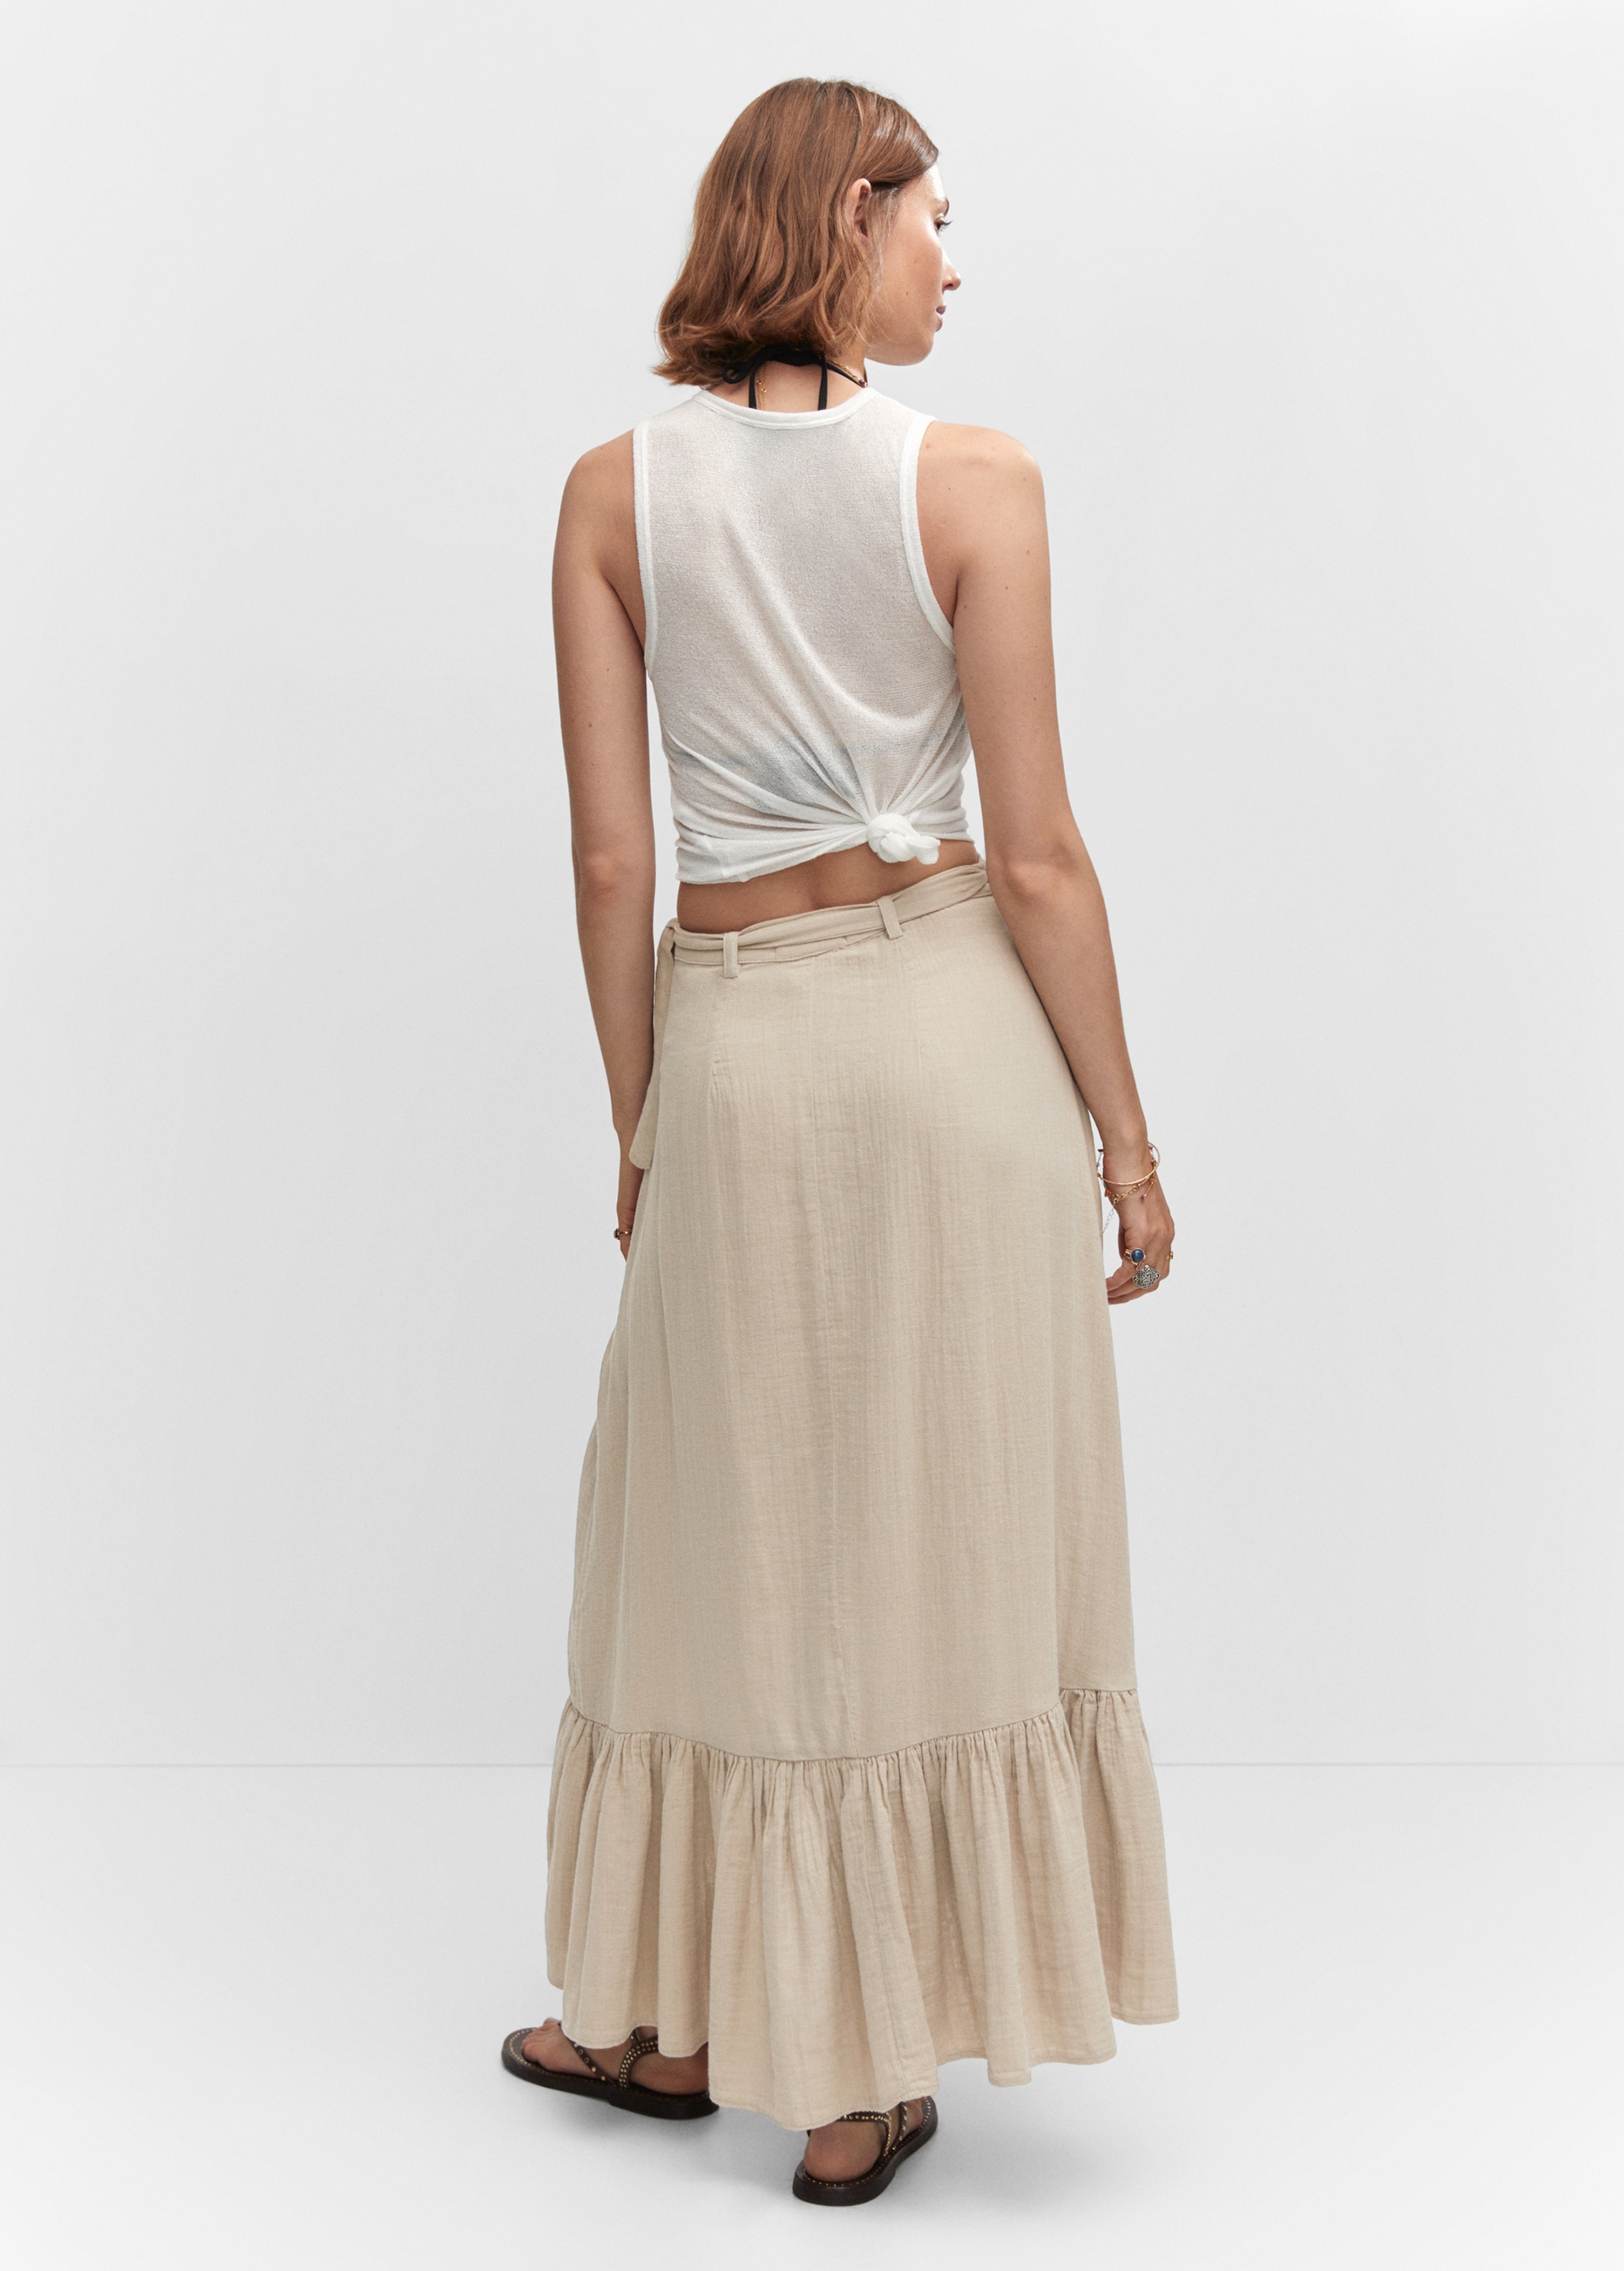 Textured criss-cross skirt - Reverse of the article